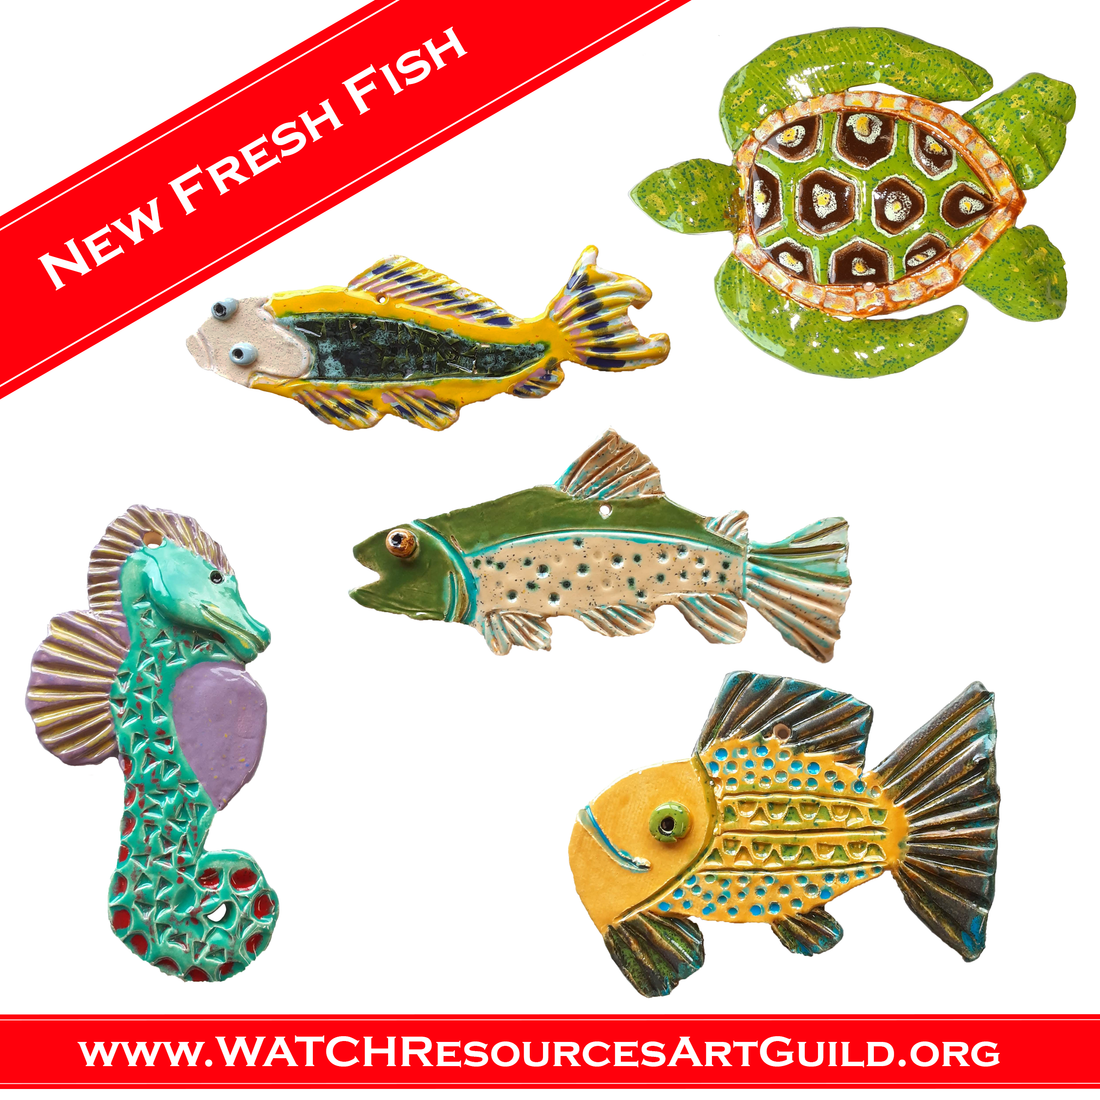 WATCH Resources Art Guild Fresh Fish March 2021